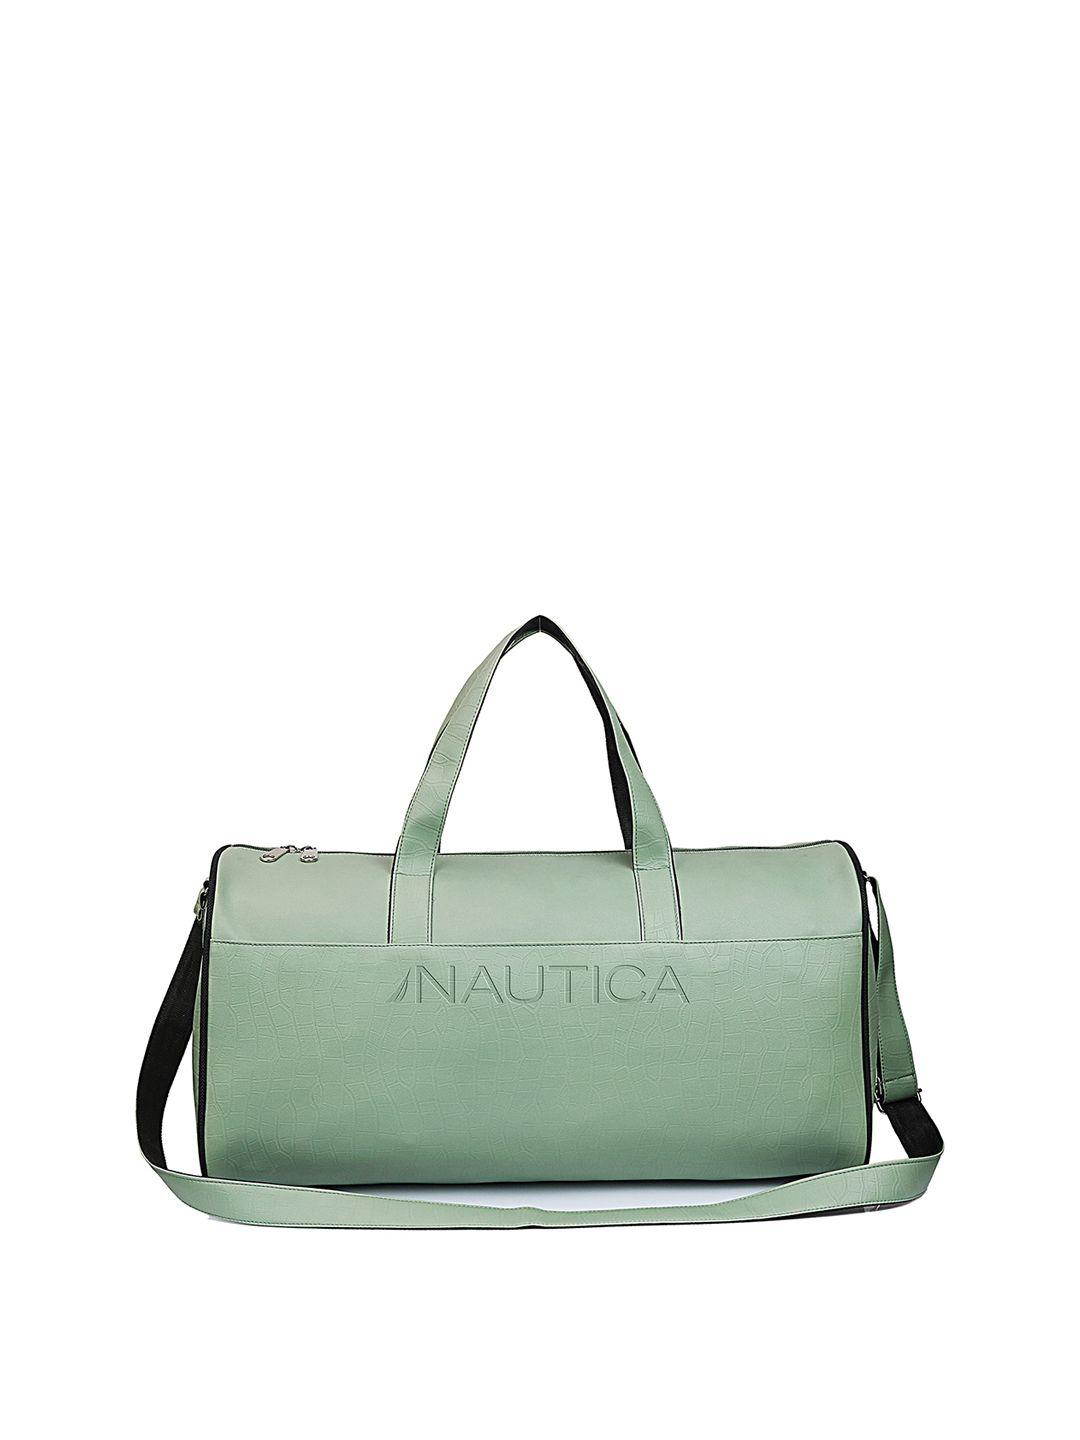 nautica leather duffel bag